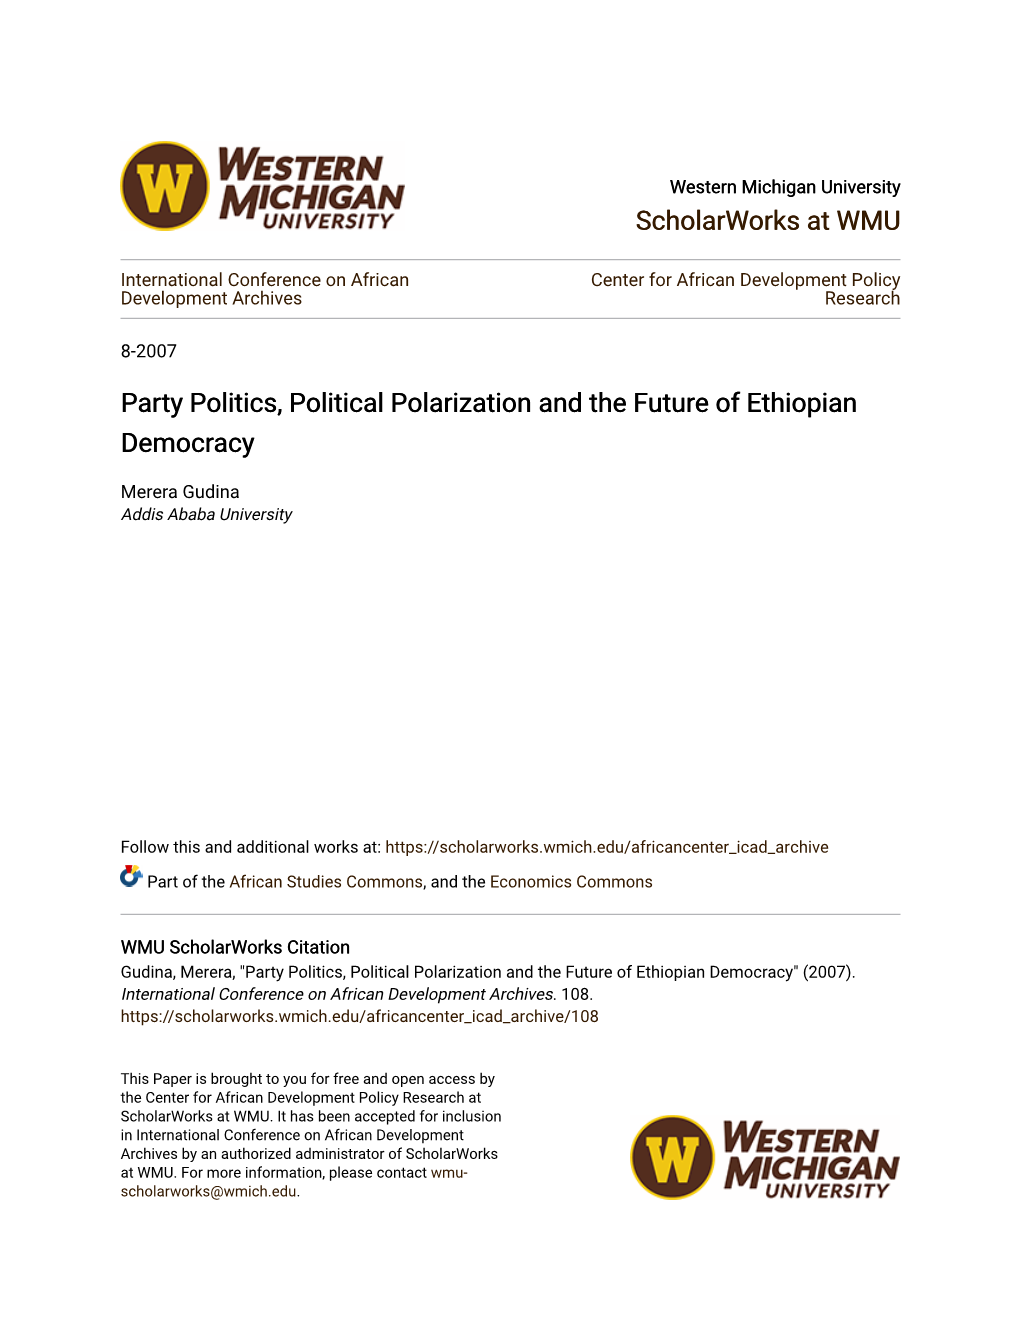 Party Politics, Political Polarization and the Future of Ethiopian Democracy